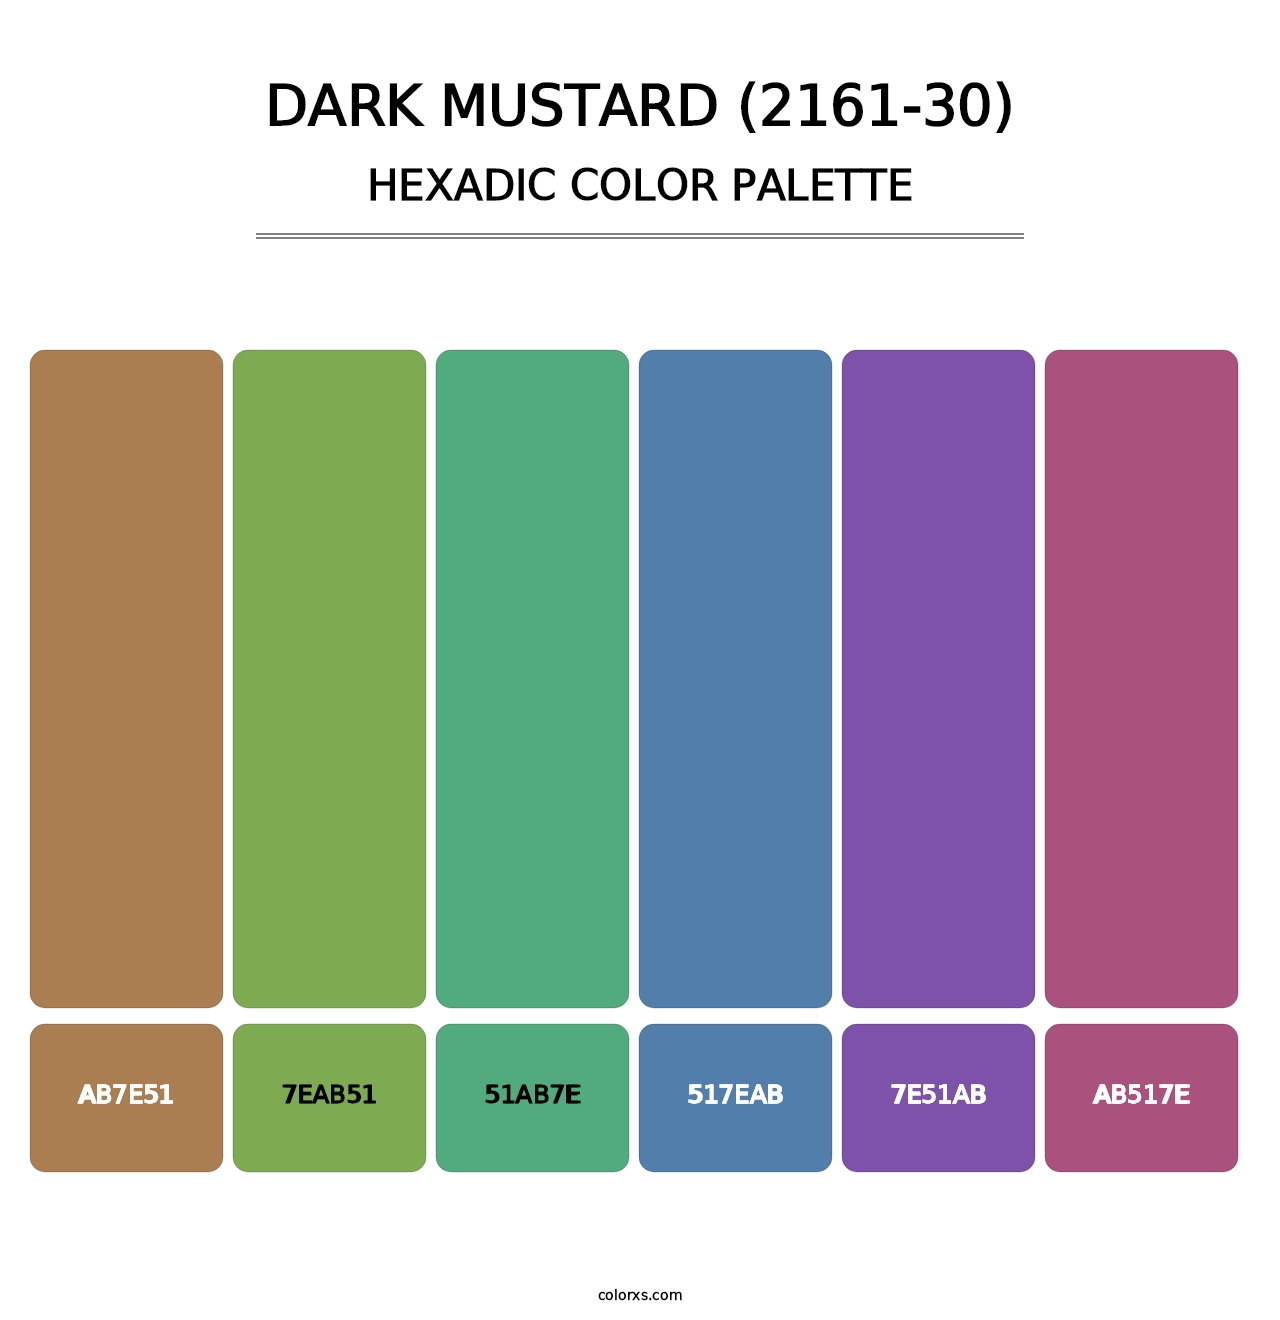 Dark Mustard (2161-30) - Hexadic Color Palette